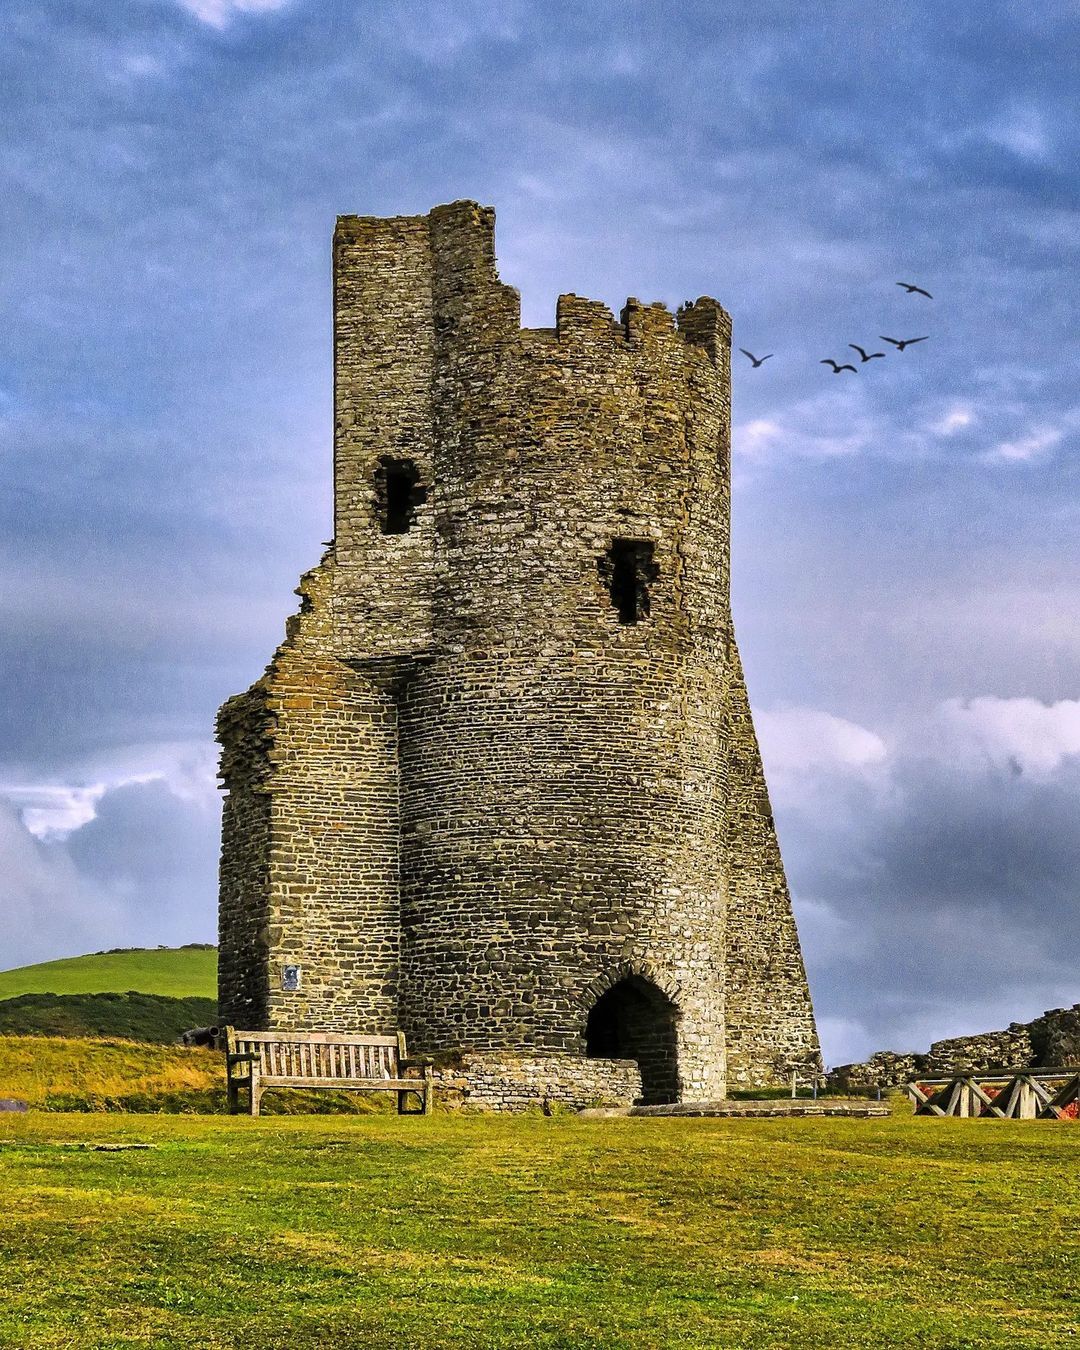 Aberystwyth Castle. Standing alone in the last of the days warmth.
#castle #aberystwyth #aberystwythseafront #aberystwythcastle #castlesofinstagram #castlesofwales #castlesoftheworld #goldenhour (at Aberystwyth...